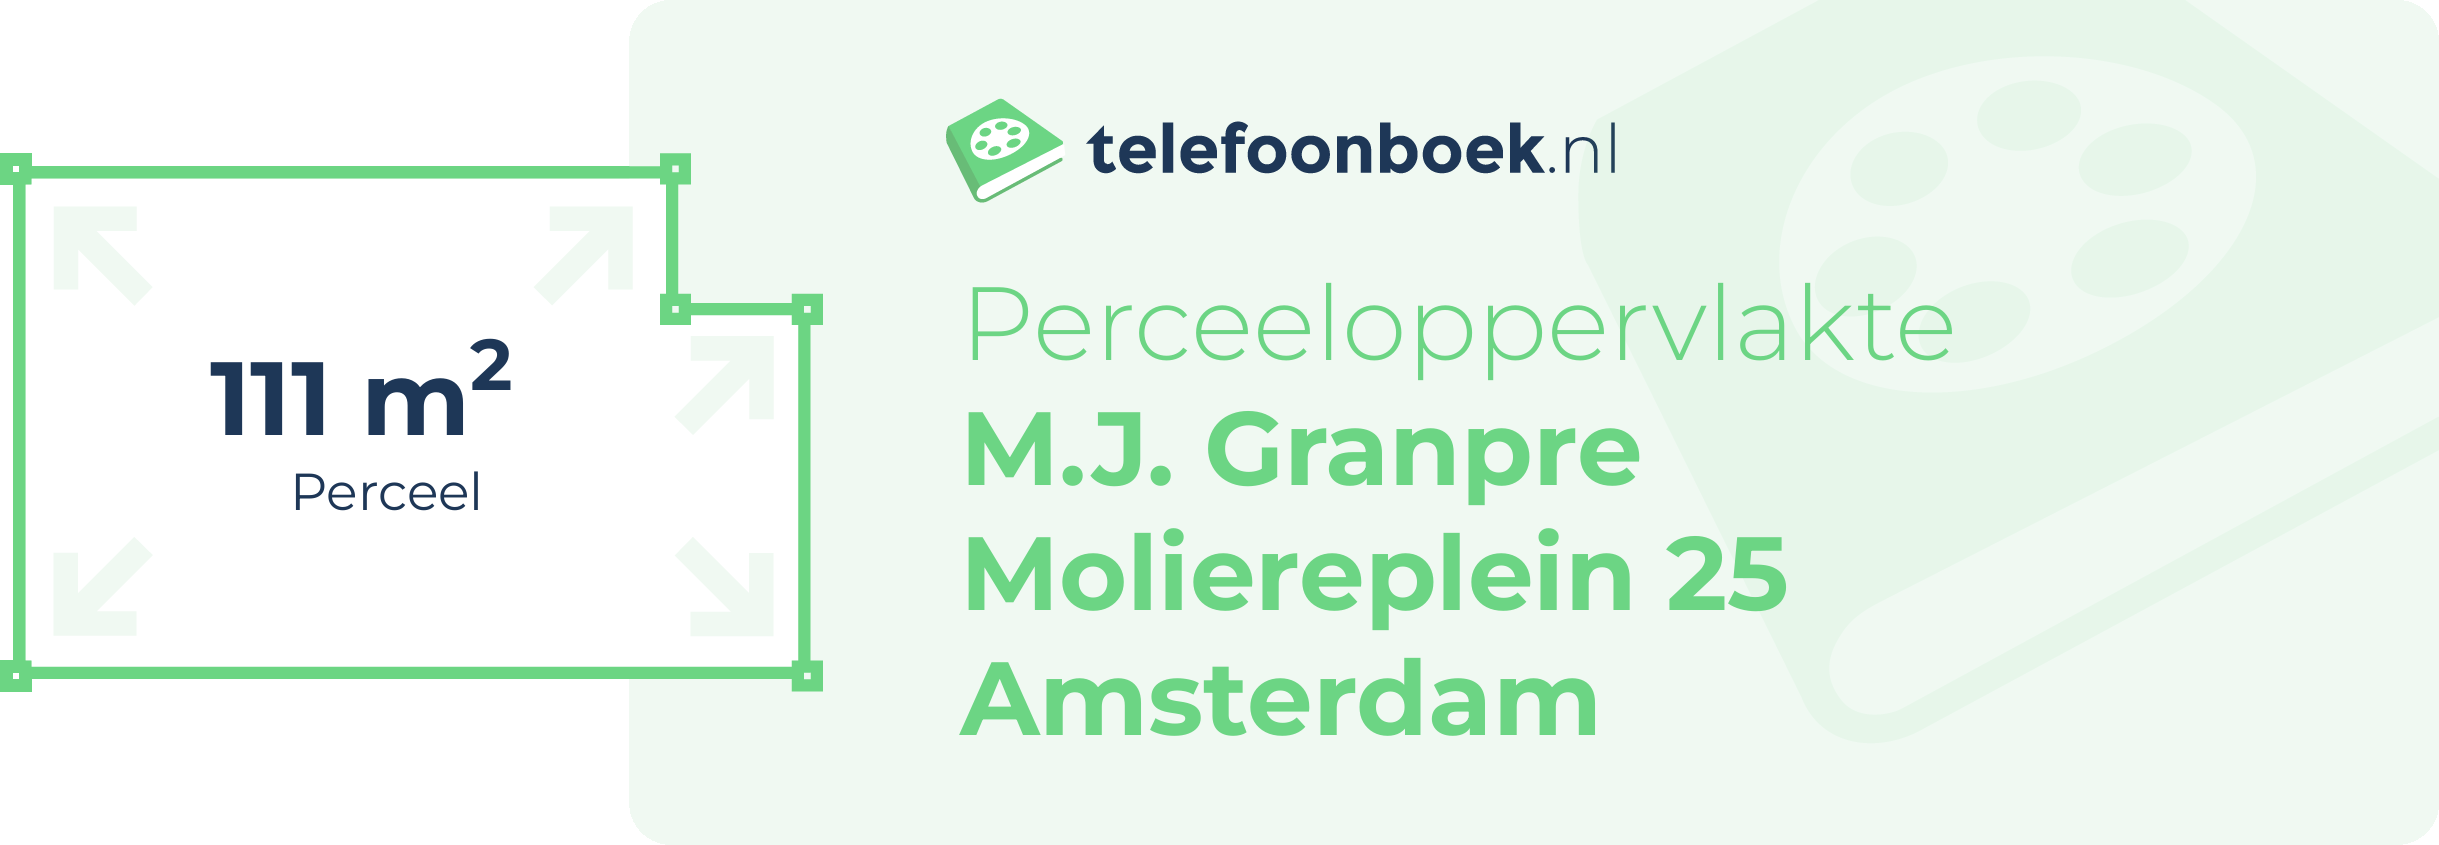 Perceeloppervlakte M.J. Granpre Moliereplein 25 Amsterdam